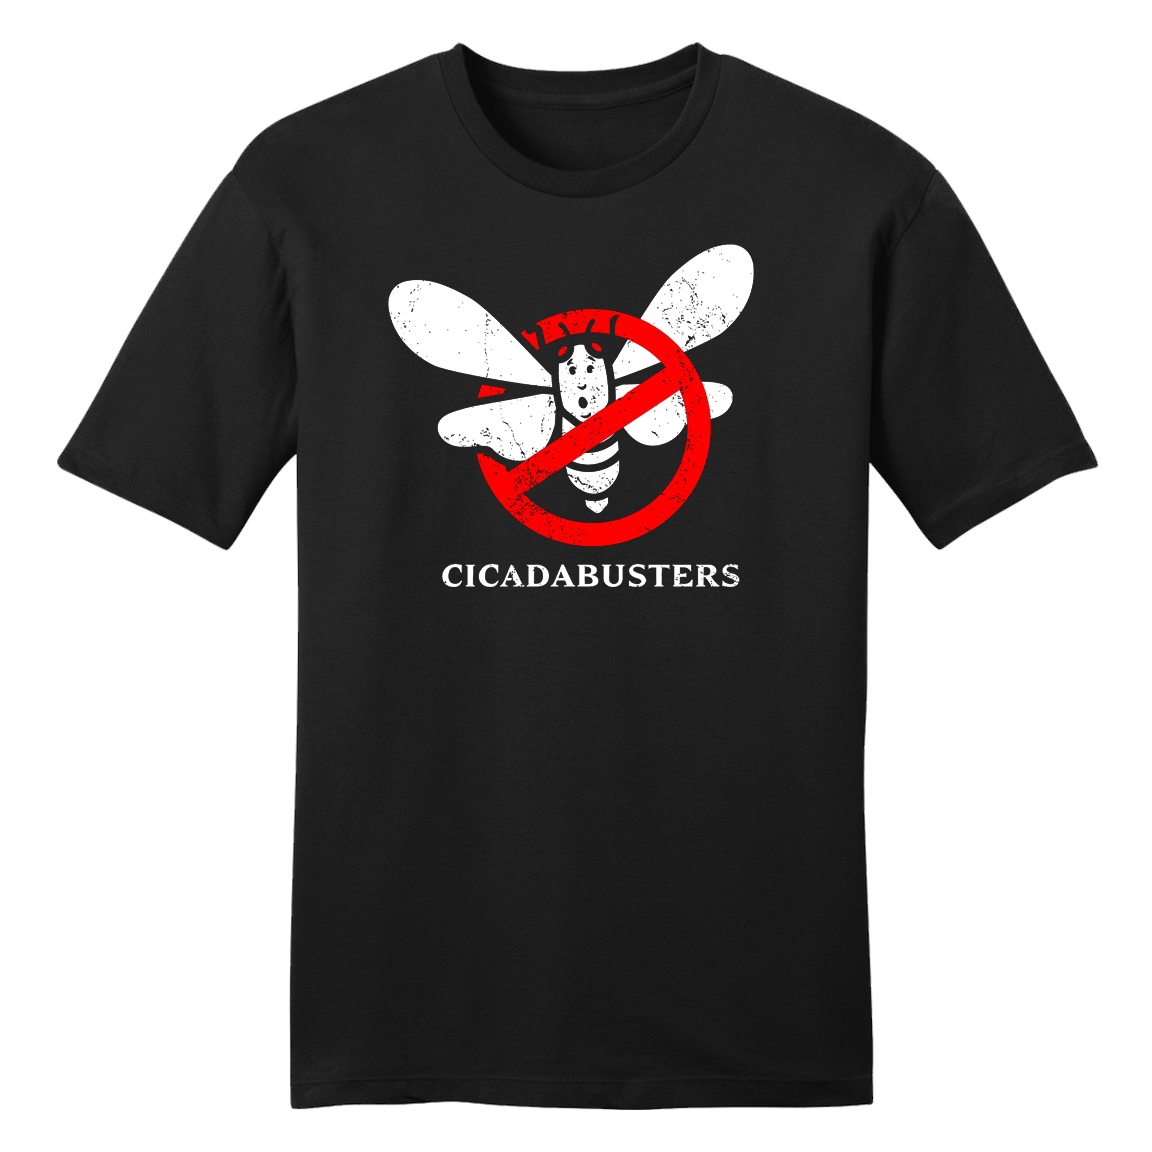 Cicadabusters